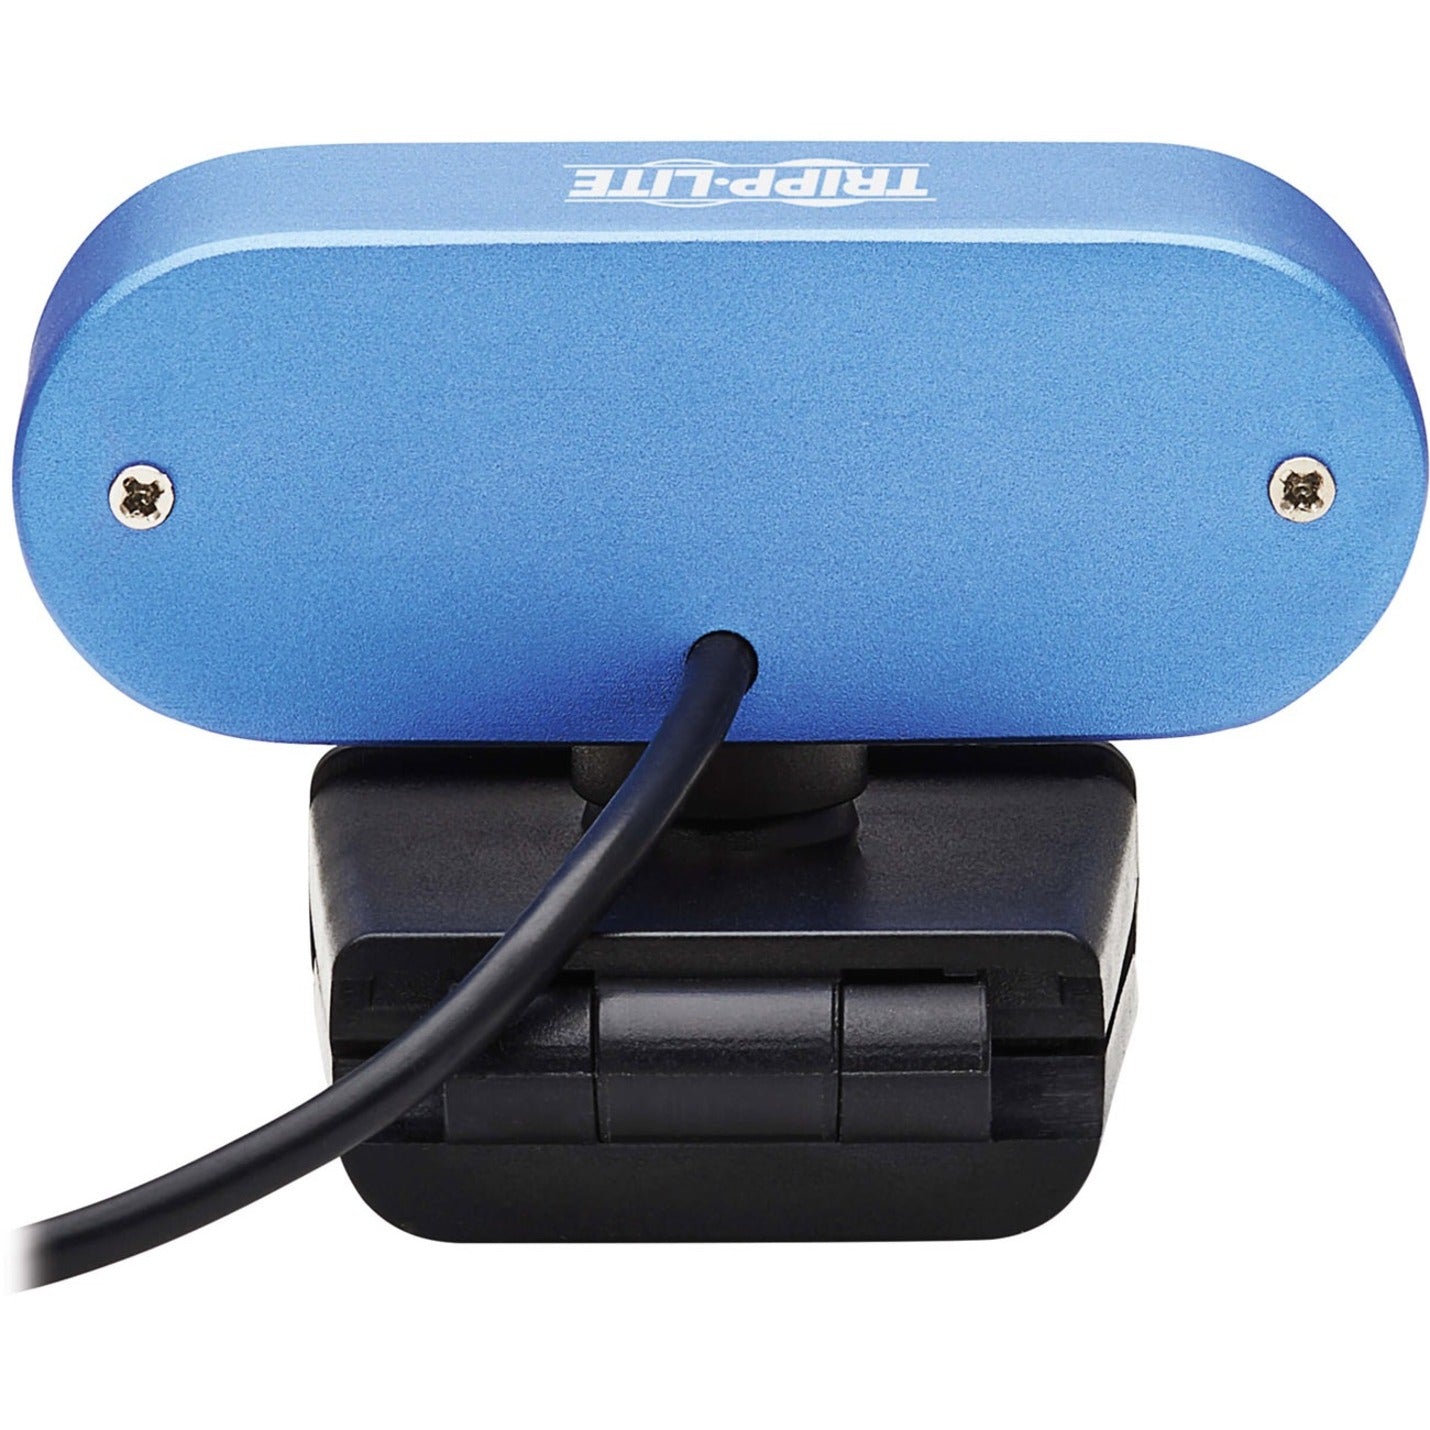 Tripp Lite AWC-002 1080p USB Webcam, 2 Megapixel, 30 fps, 1920 x 1080, Built-in Microphone